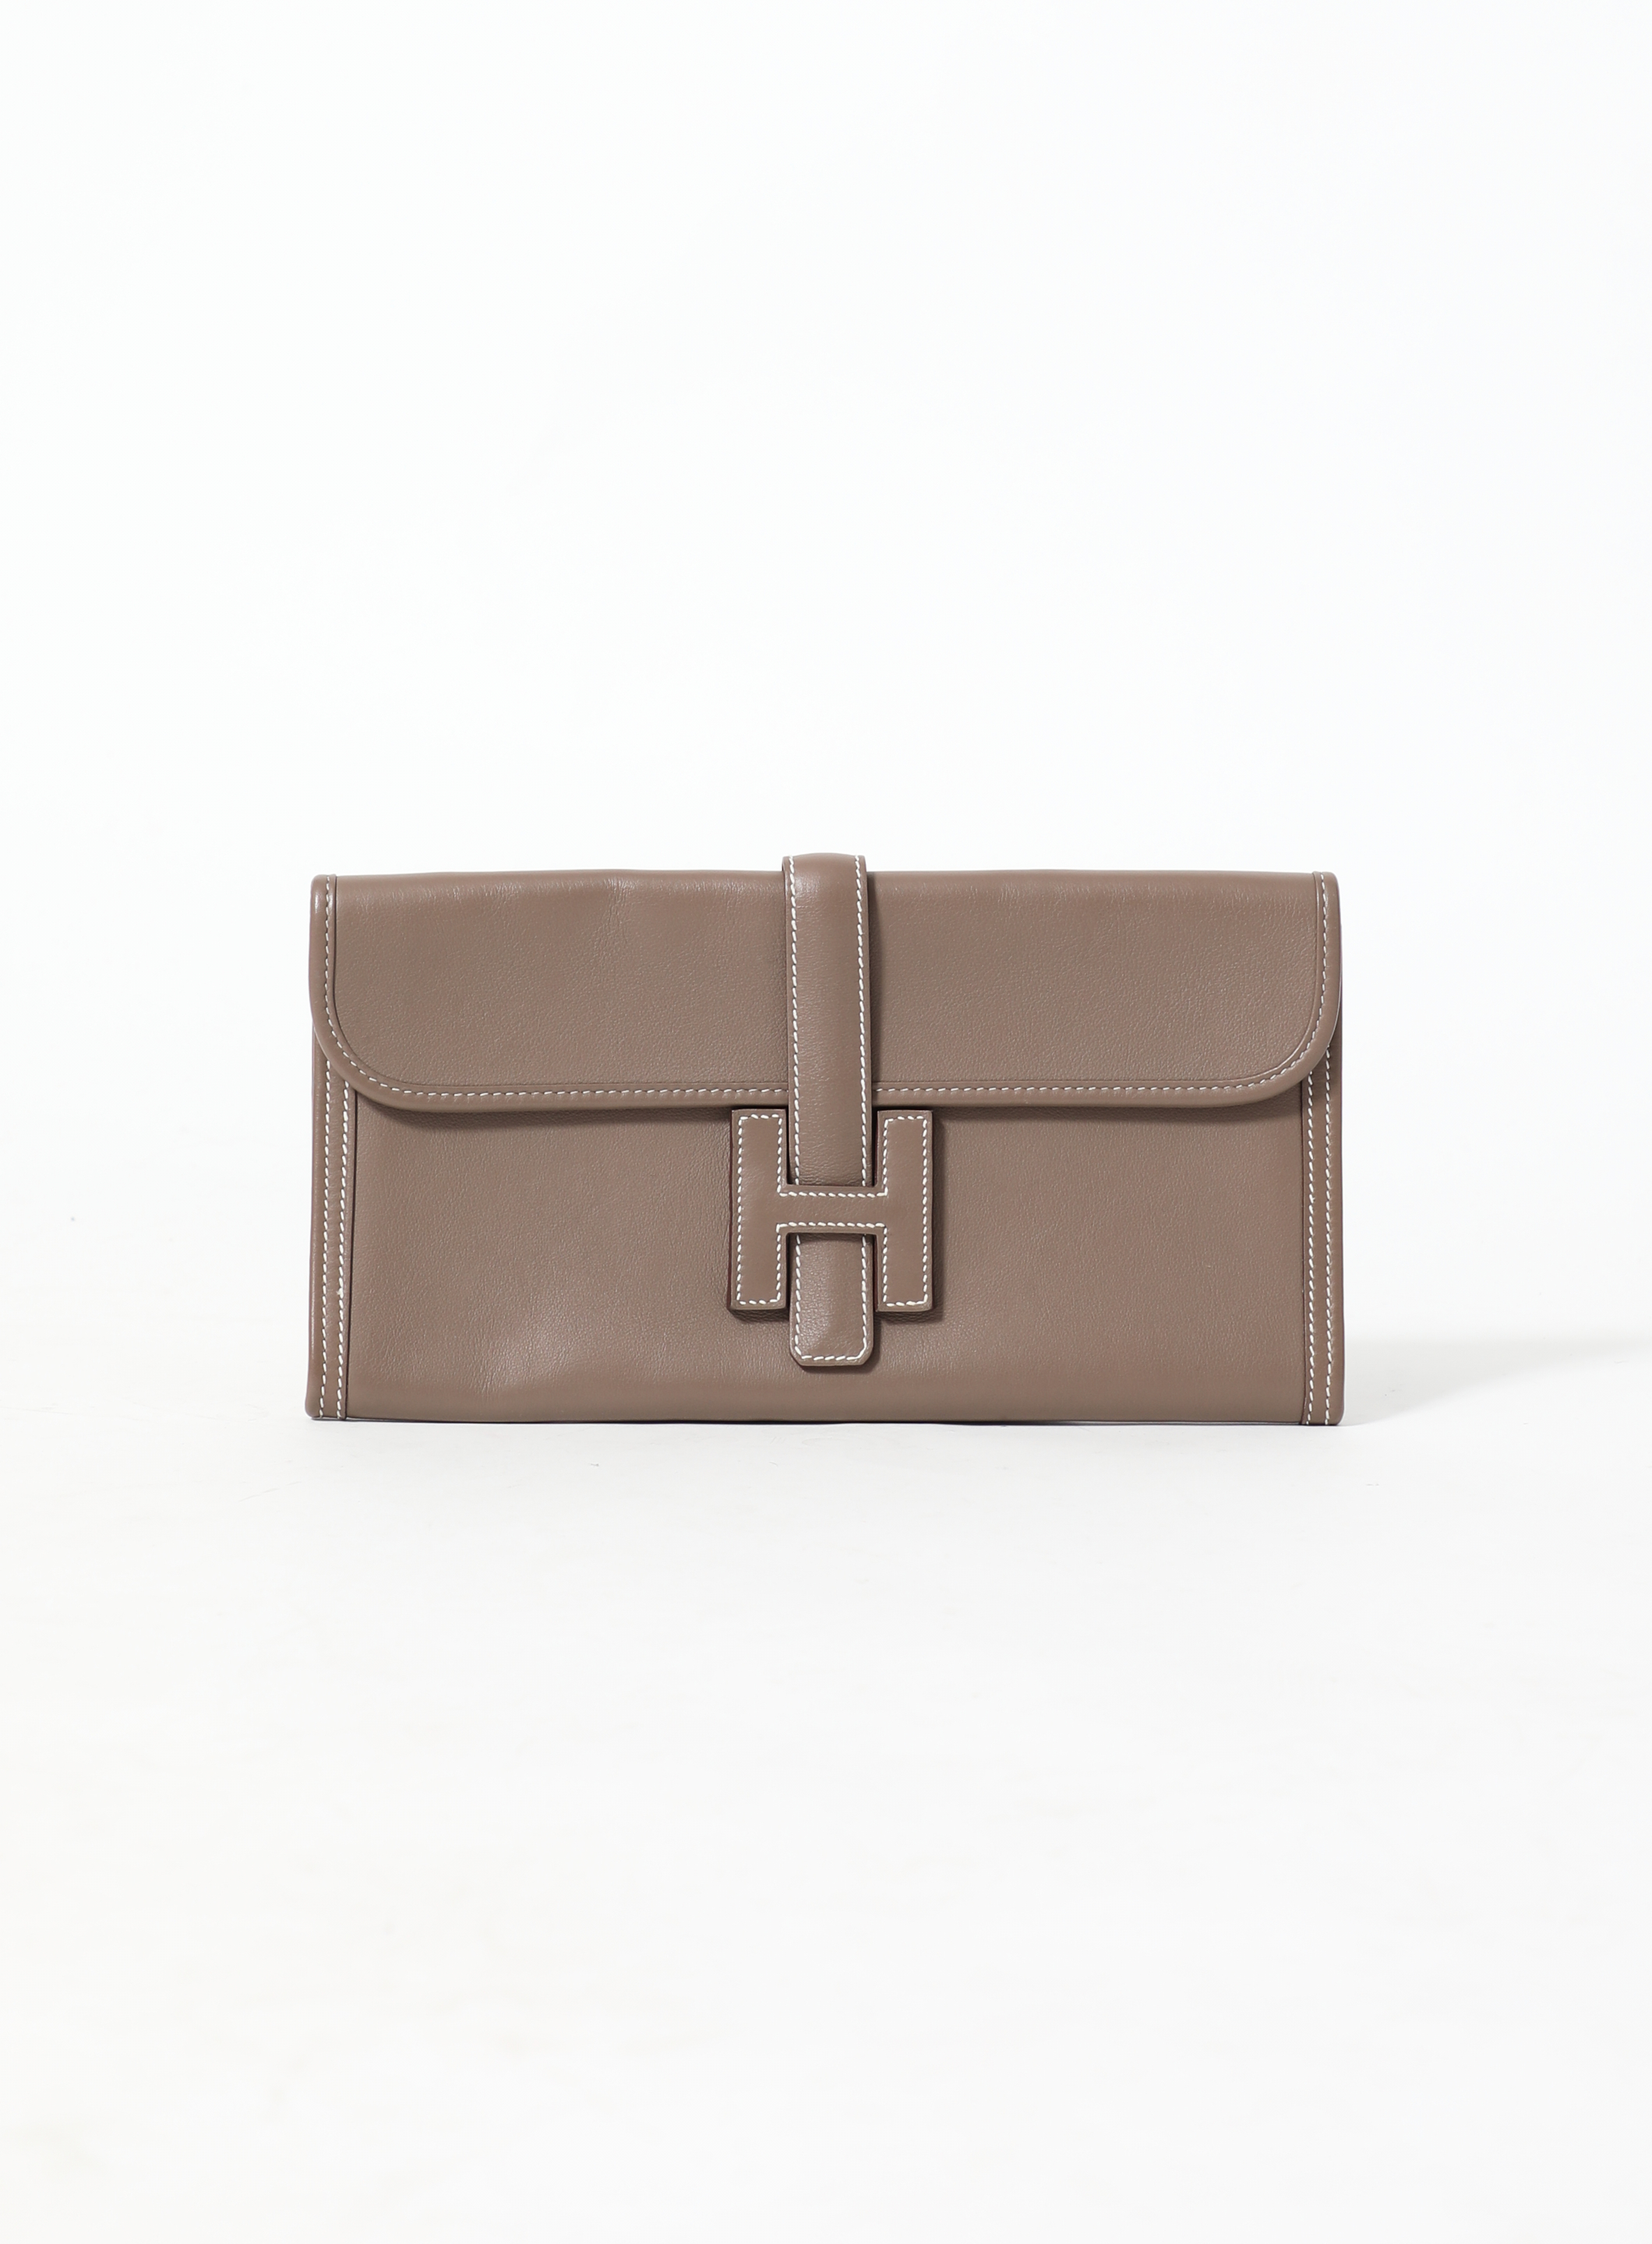 Hermes Swift Leather Jige 29 Clutch Bag